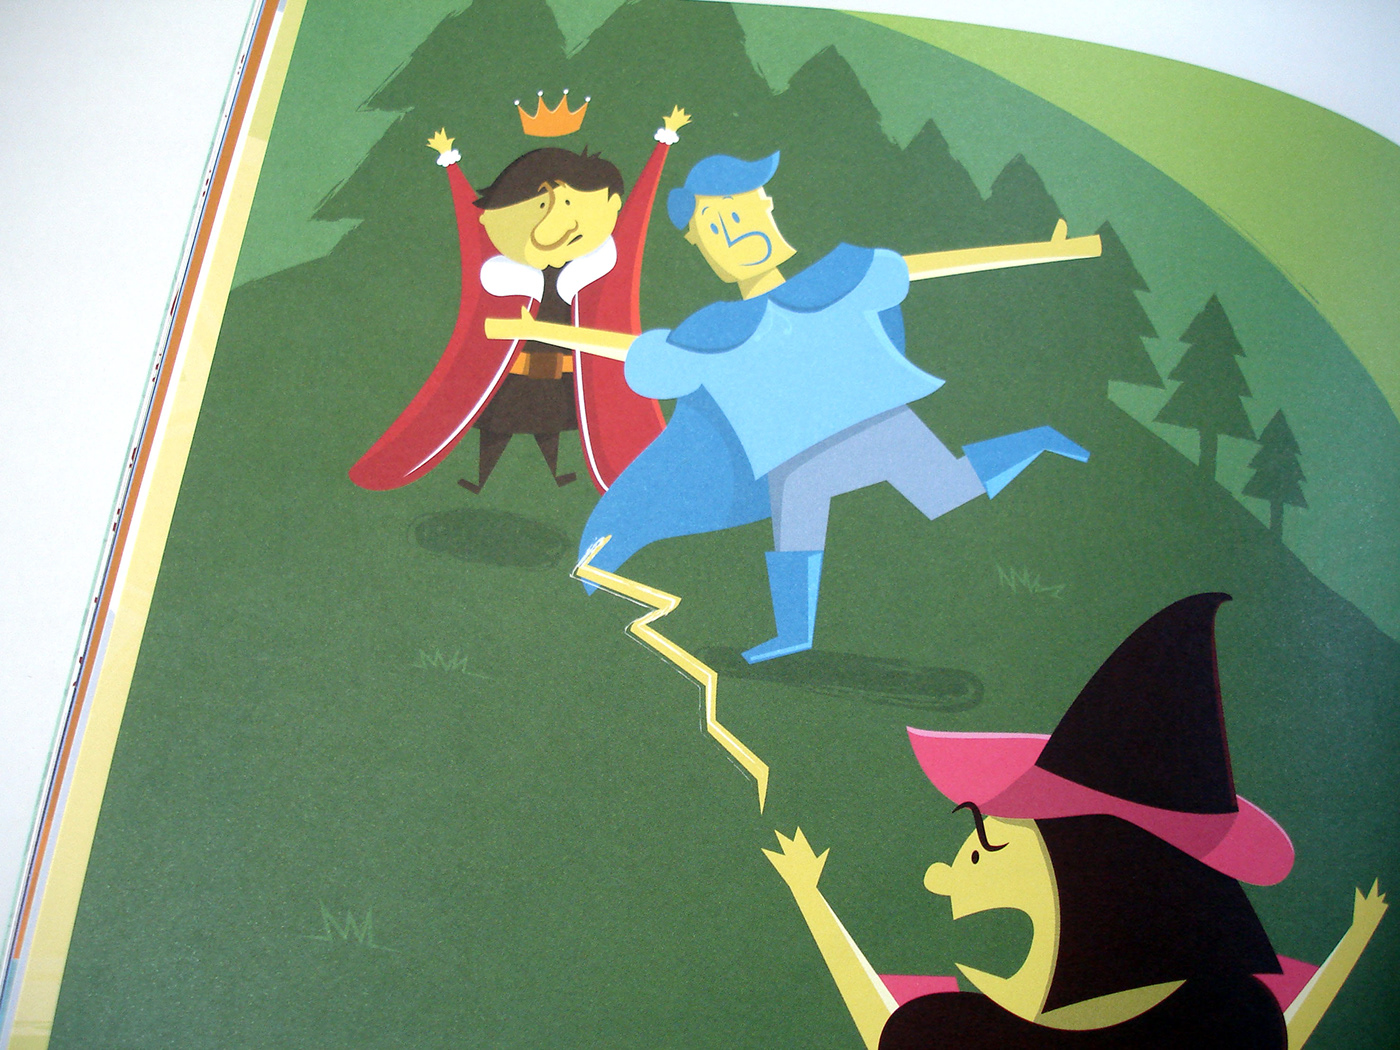 o grande feiticeiro feiticeiro Grand Wizard book children children's book children book vector prince Princess witch king elf Castle color